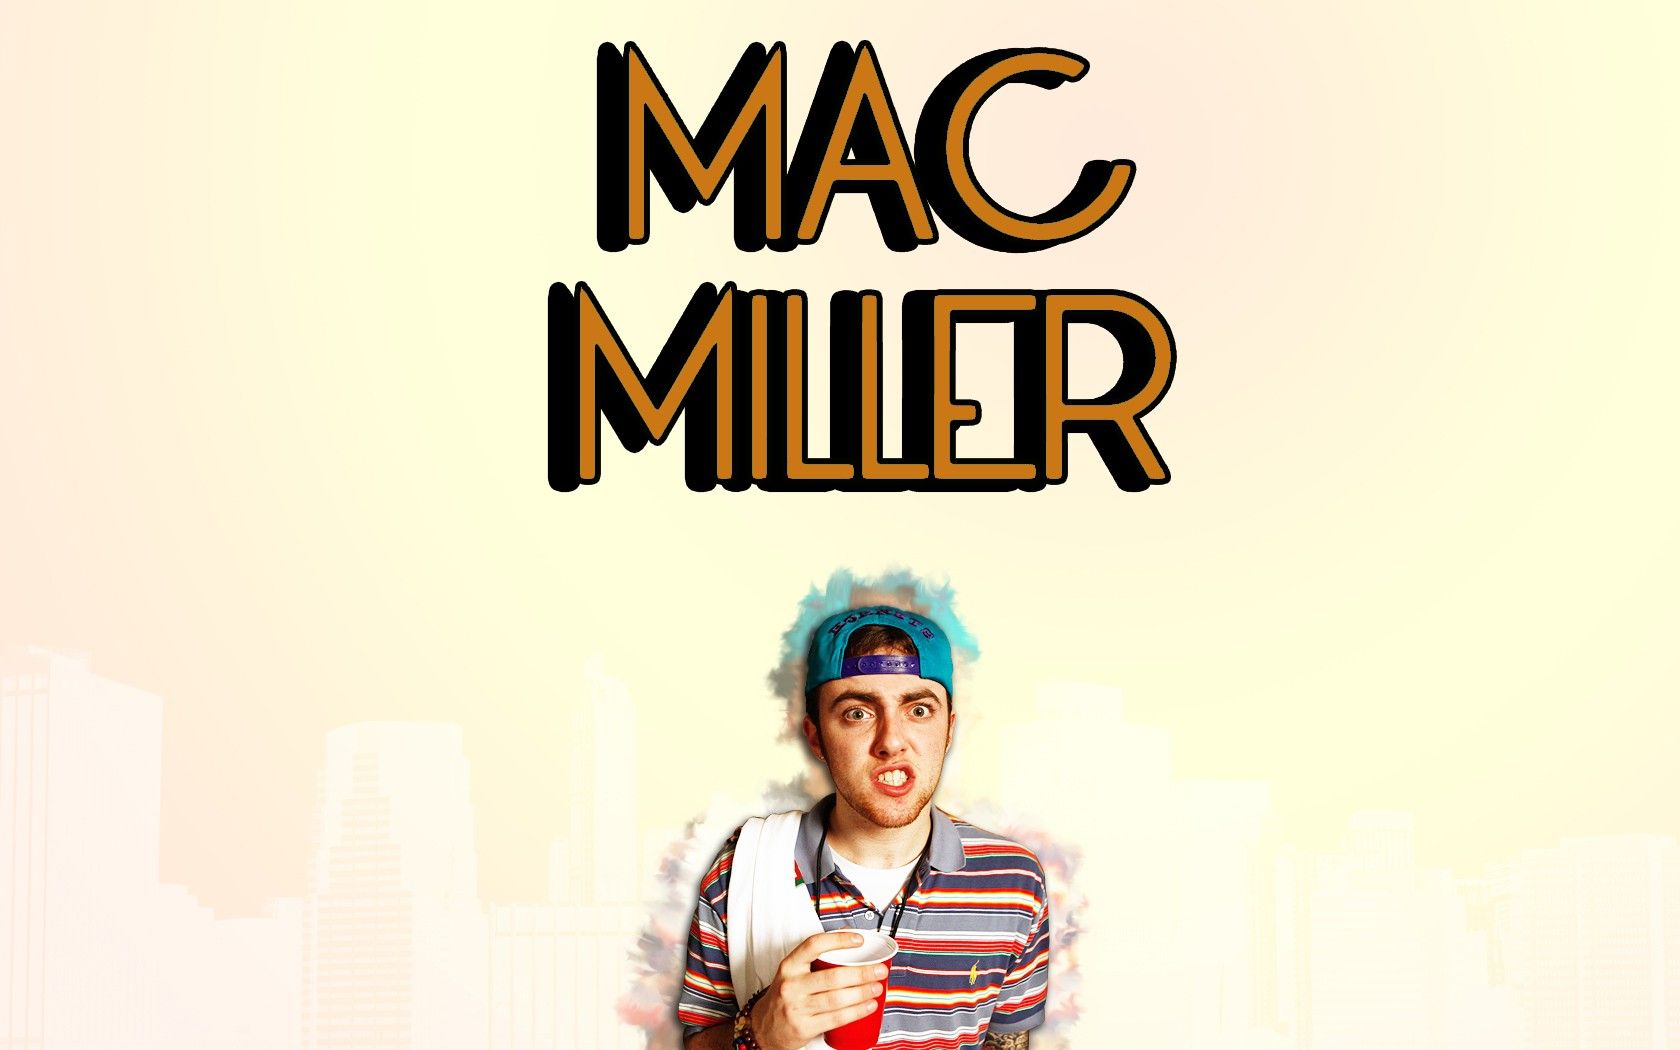 Mac Miller and Wiz Khalifa Quotes Wallpaper Free Mac Miller and Wiz Khalifa Quotes Background